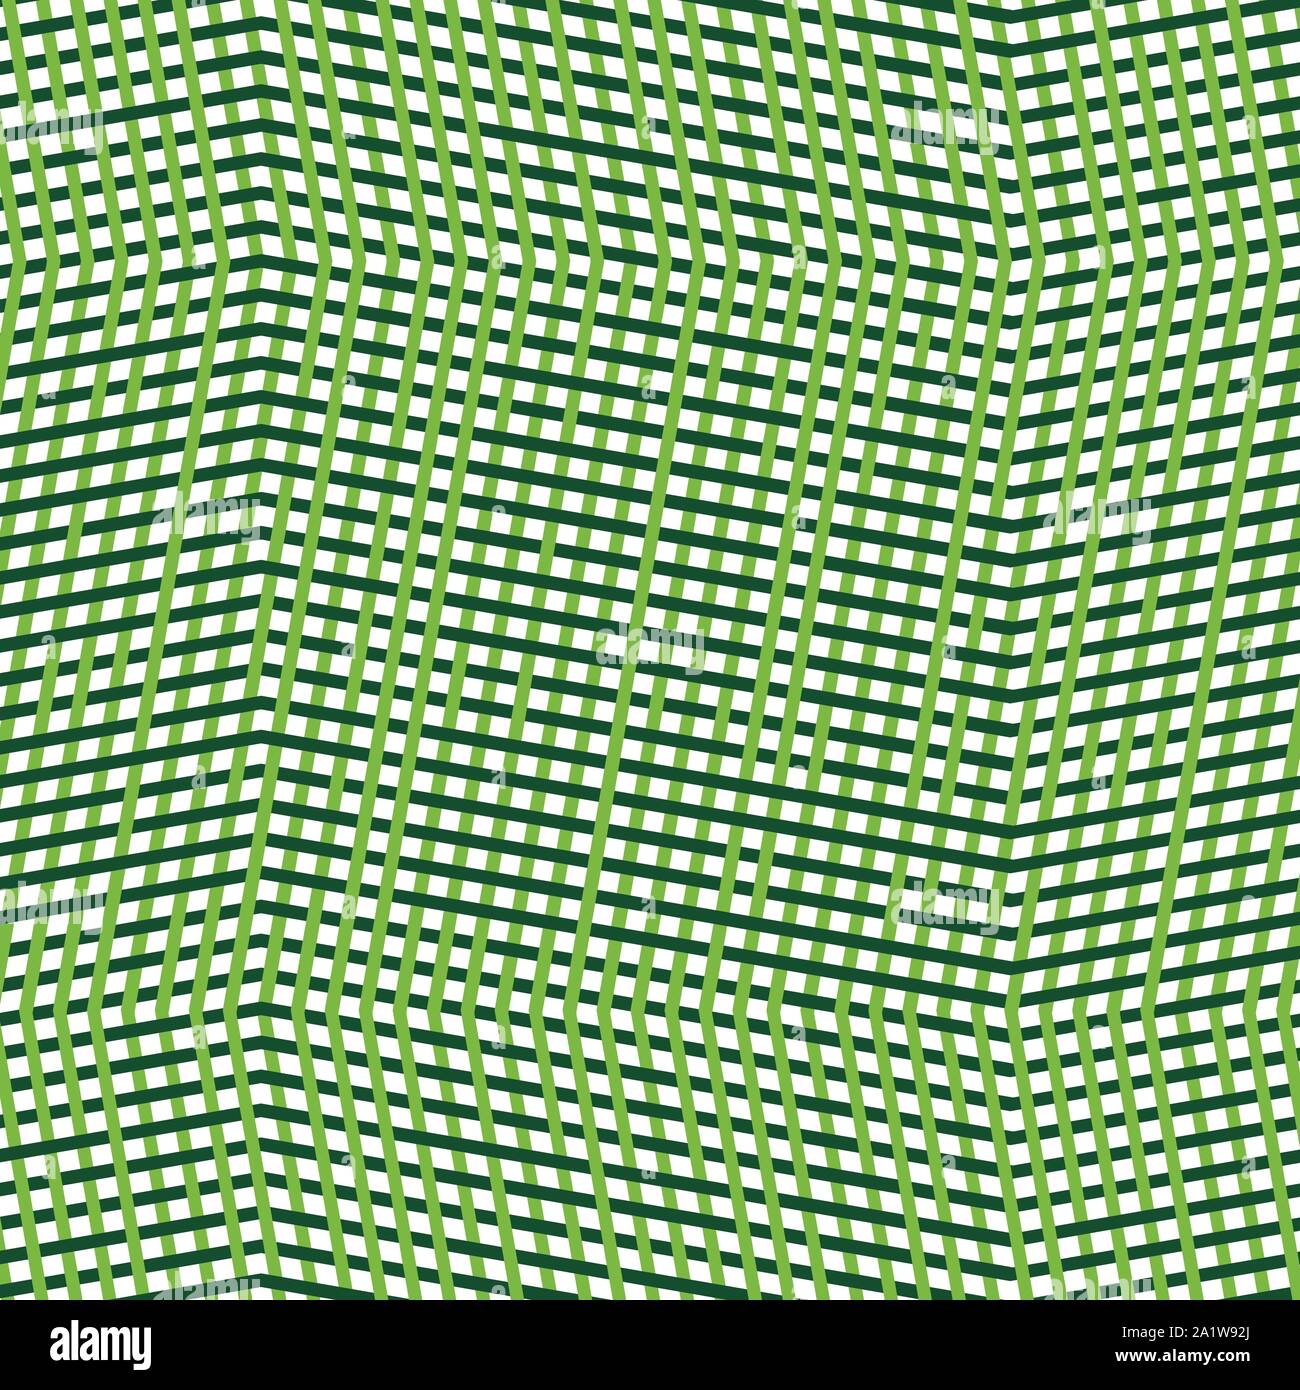 https://c8.alamy.com/comp/2A1W92J/intersected-interweaved-irregular-lines-stripes-green-grid-pattern-interlocking-weaved-curvy-and-jagged-lines-stripes-tweaked-distorted-cross-h-2A1W92J.jpg